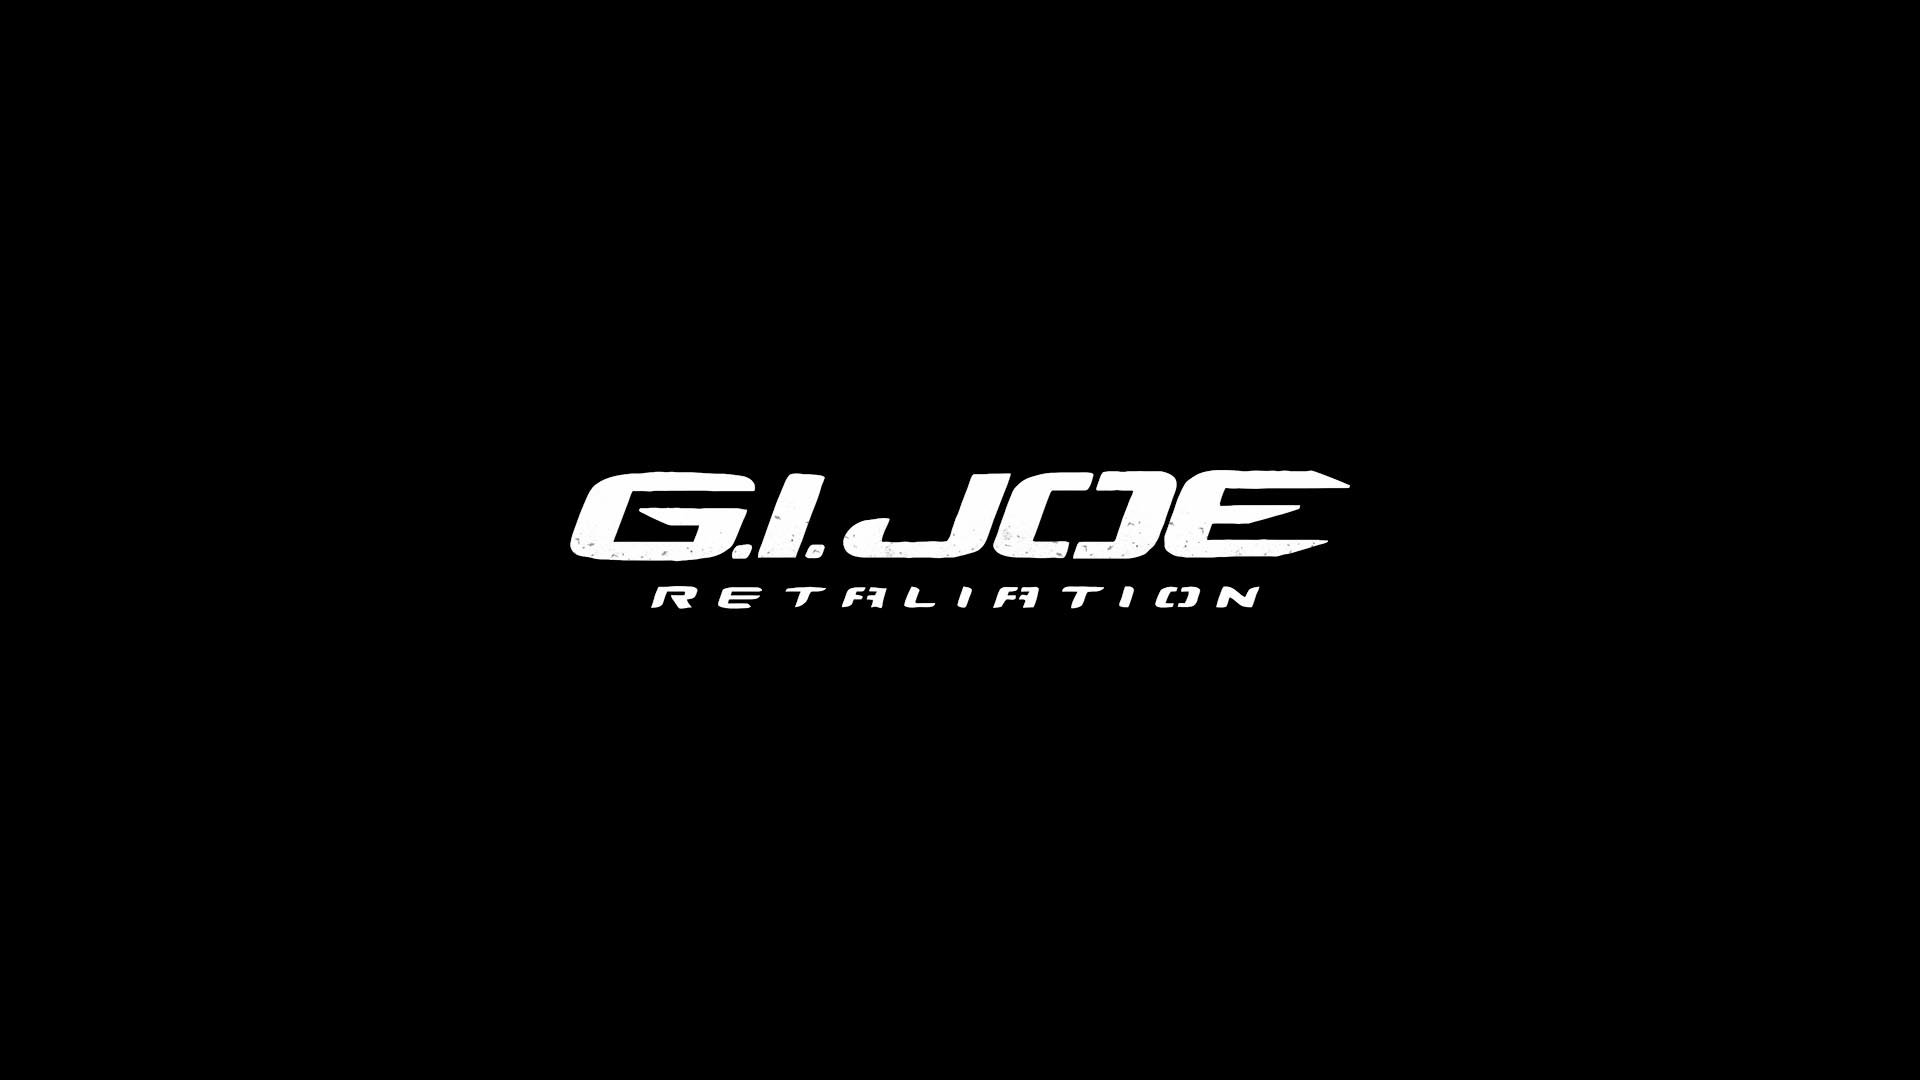 Awesome G.I. Joe: Retaliation free wallpaper ID:198999 for full hd 1080p computer